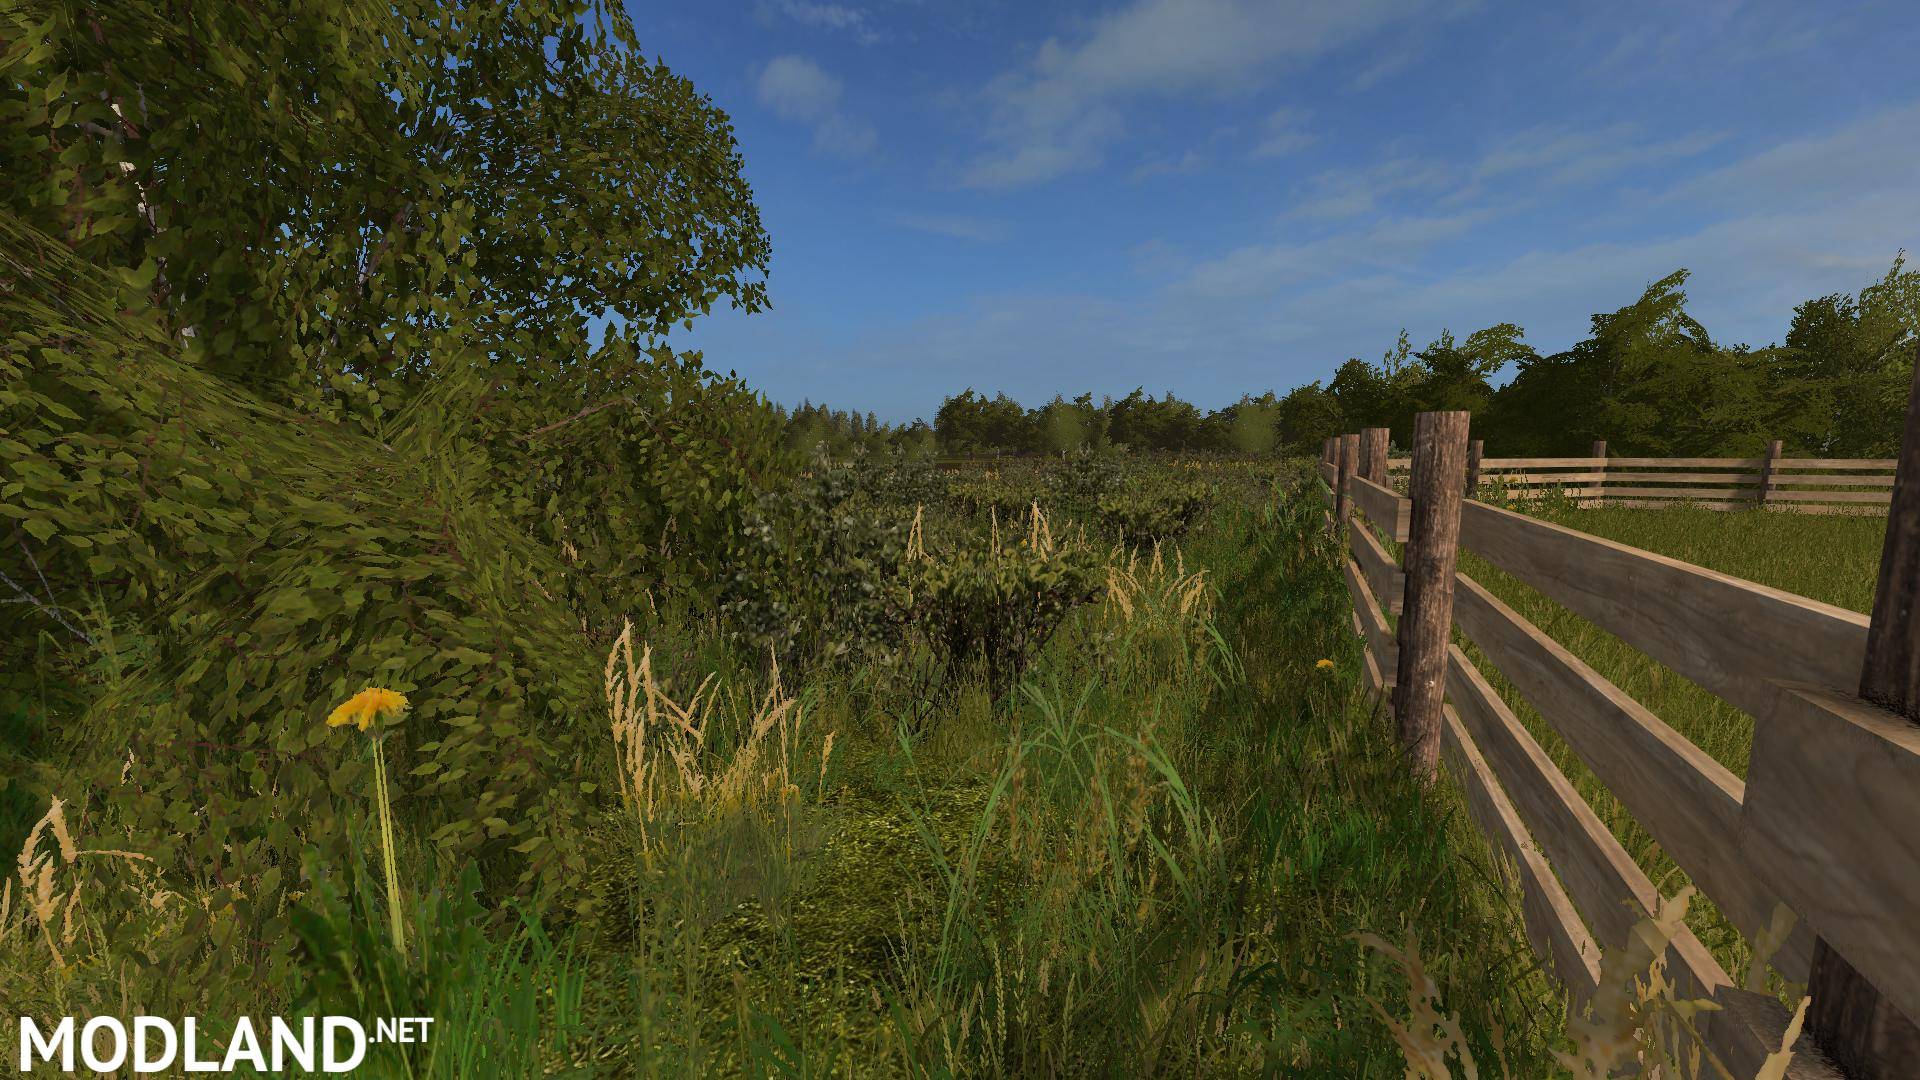 Sunny Farm Map v 1.0 mod Farming Simulator 171920 x 1080